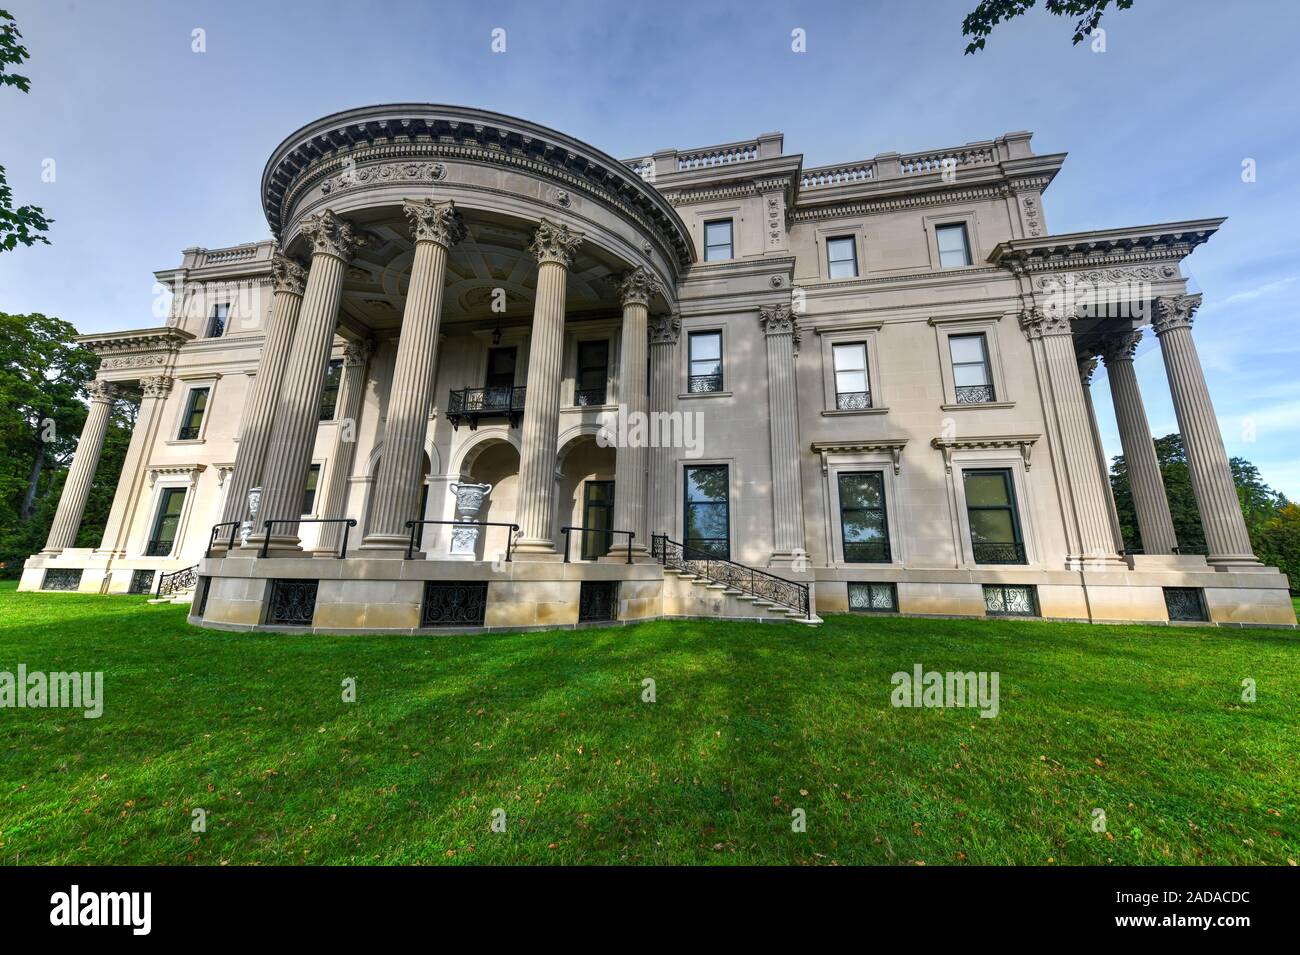 New York - Aug 31, 2019: Vanderbilt Mansion in Hyde Park, New York. Historically known as Hyde Park, the Vanderbilt Mansion National Historic Site is Stock Photo